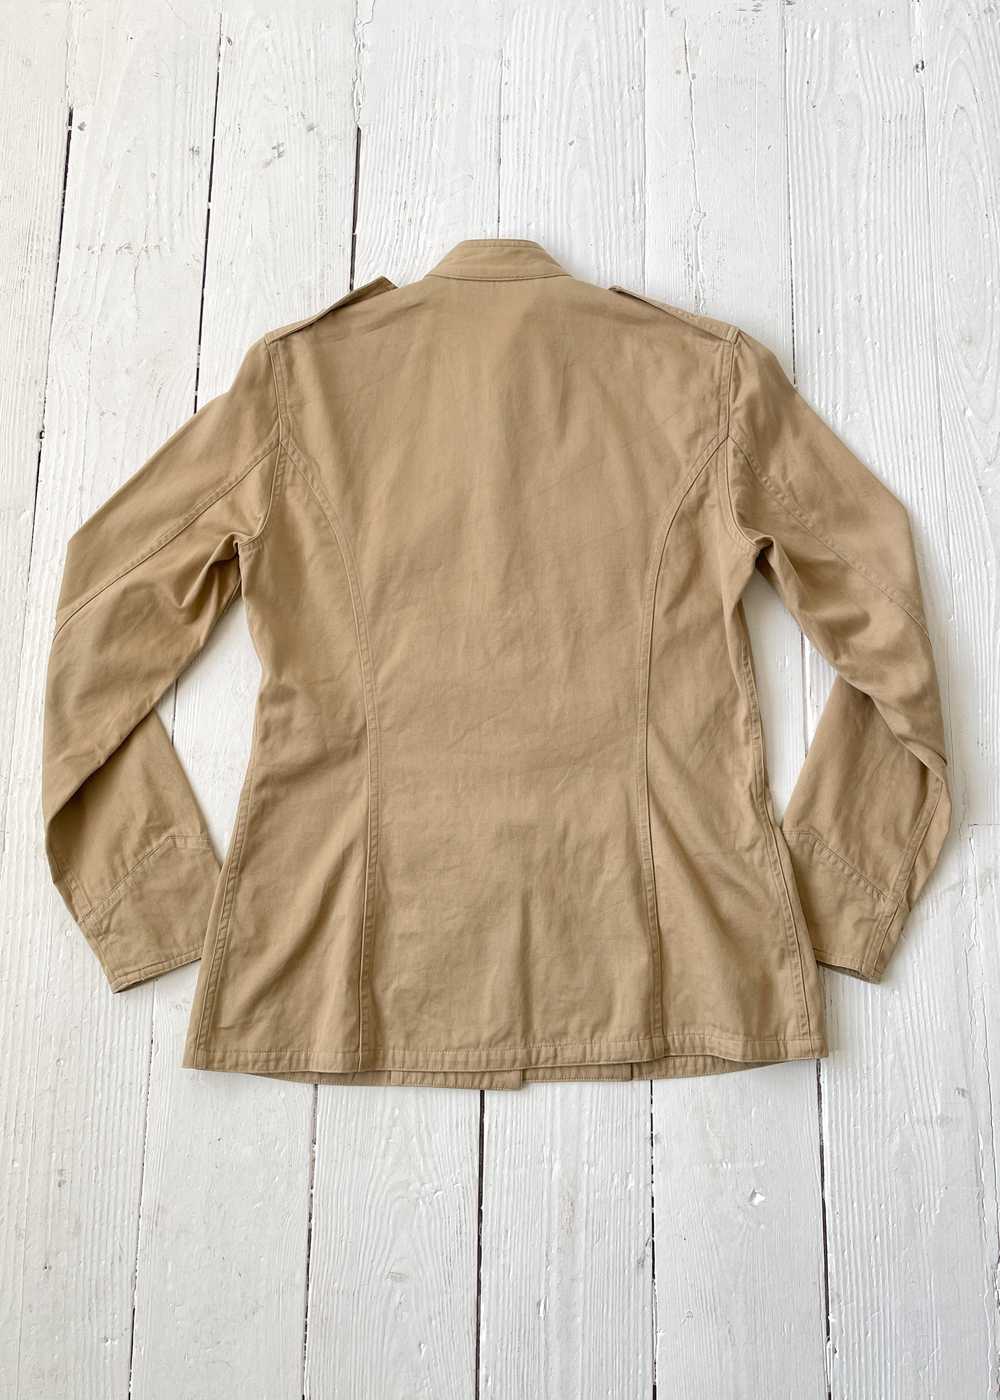 Vintage 1990s Ralph Lauren Military Style Jacket - image 4